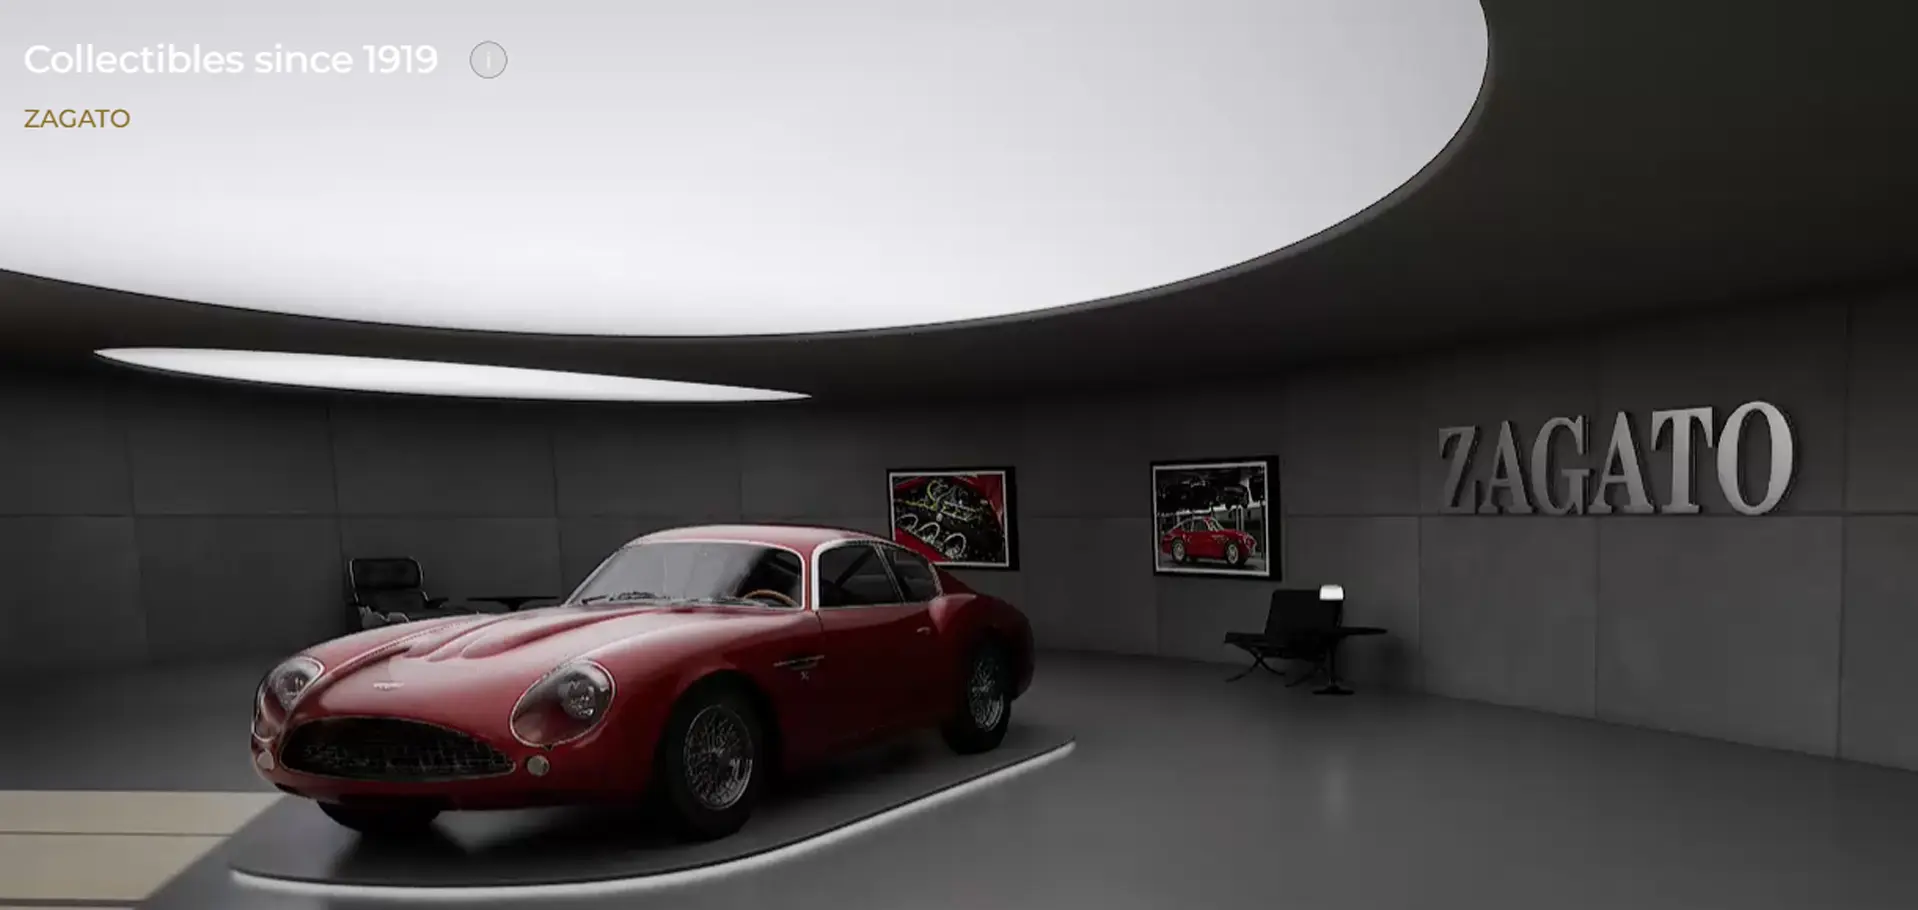 Explore why Zagato is so special in Roarington’s virtual showroom image